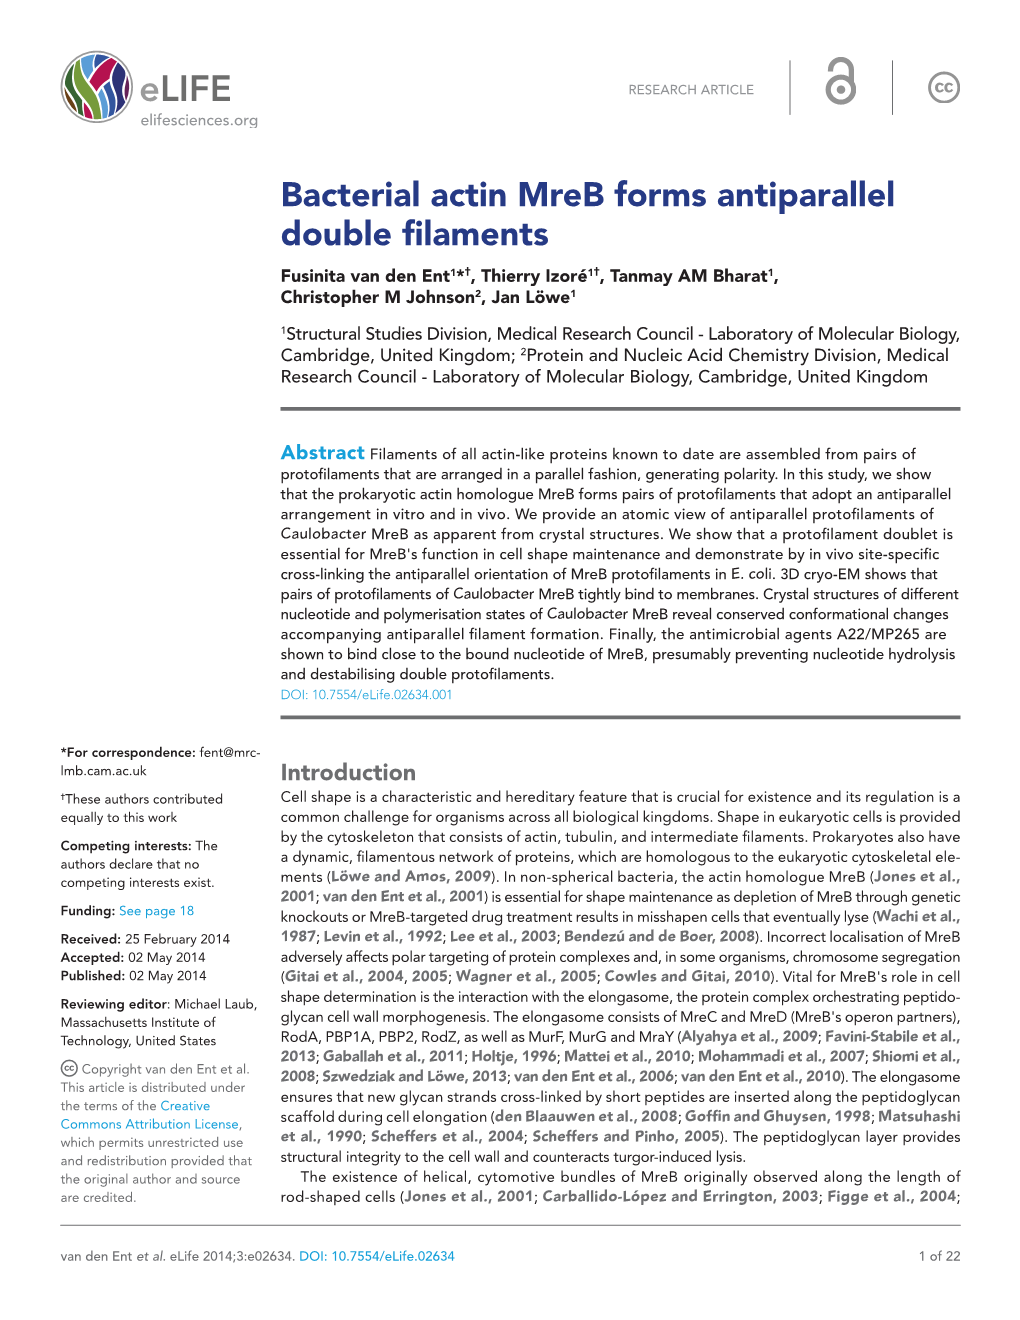 Bacterial Actin Mreb Forms Antiparallel Double Filaments Fusinita Van Den Ent1*†, Thierry Izoré1†, Tanmay AM Bharat1, Christopher M Johnson2, Jan Löwe1